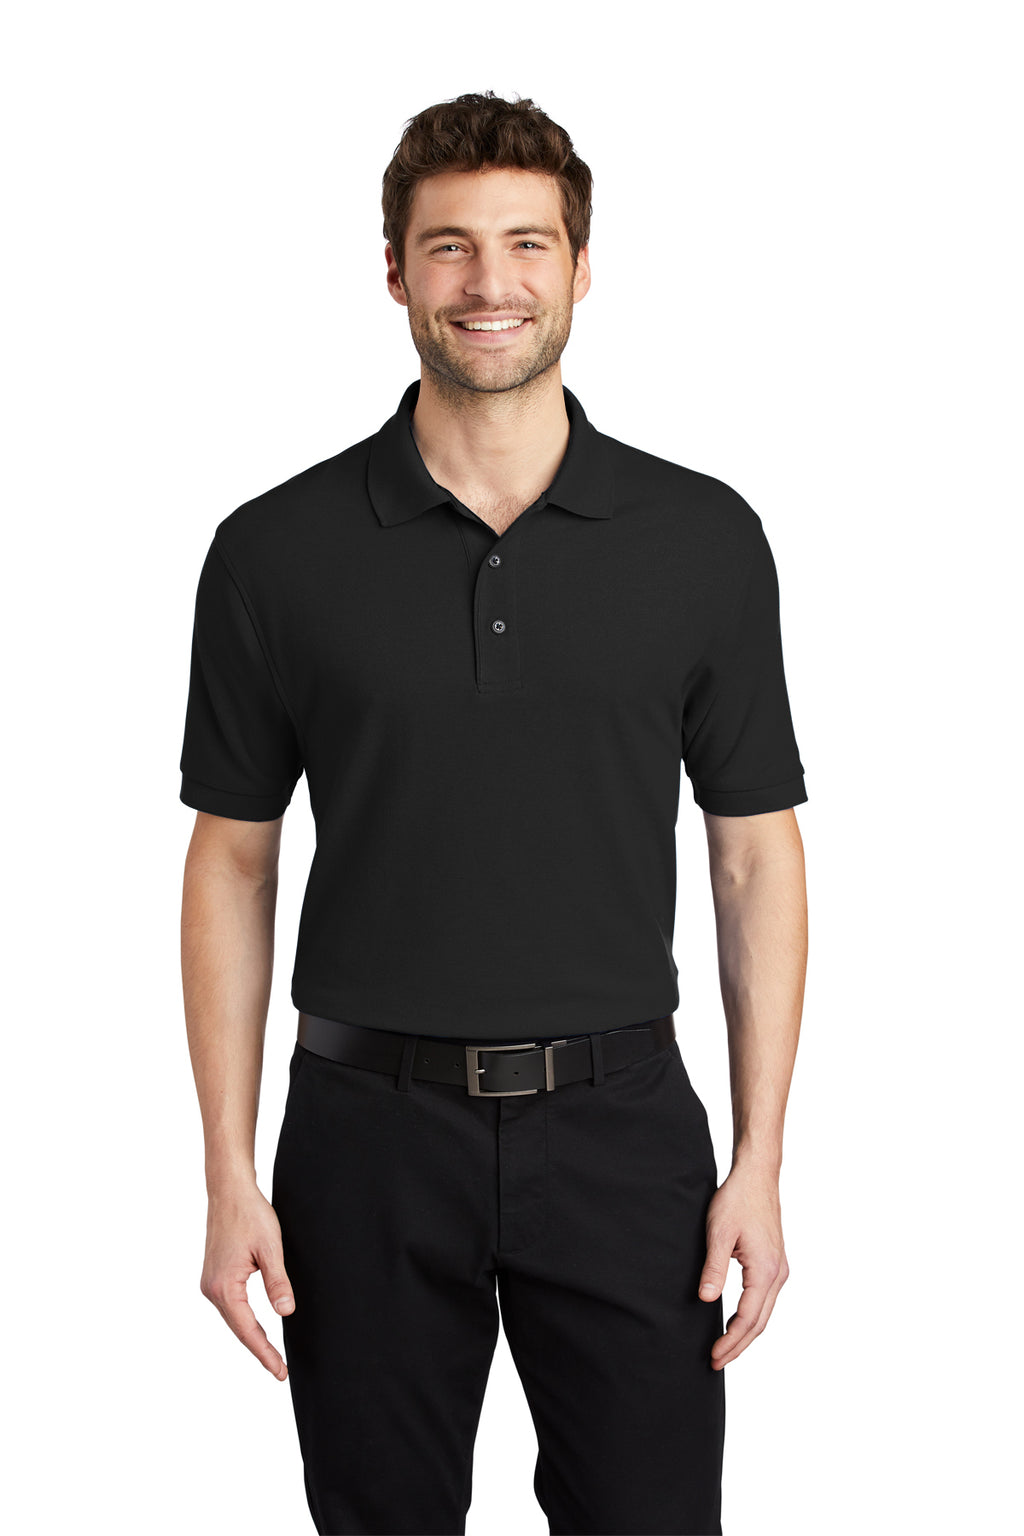 Men's Silk Touch™ Polo - Black